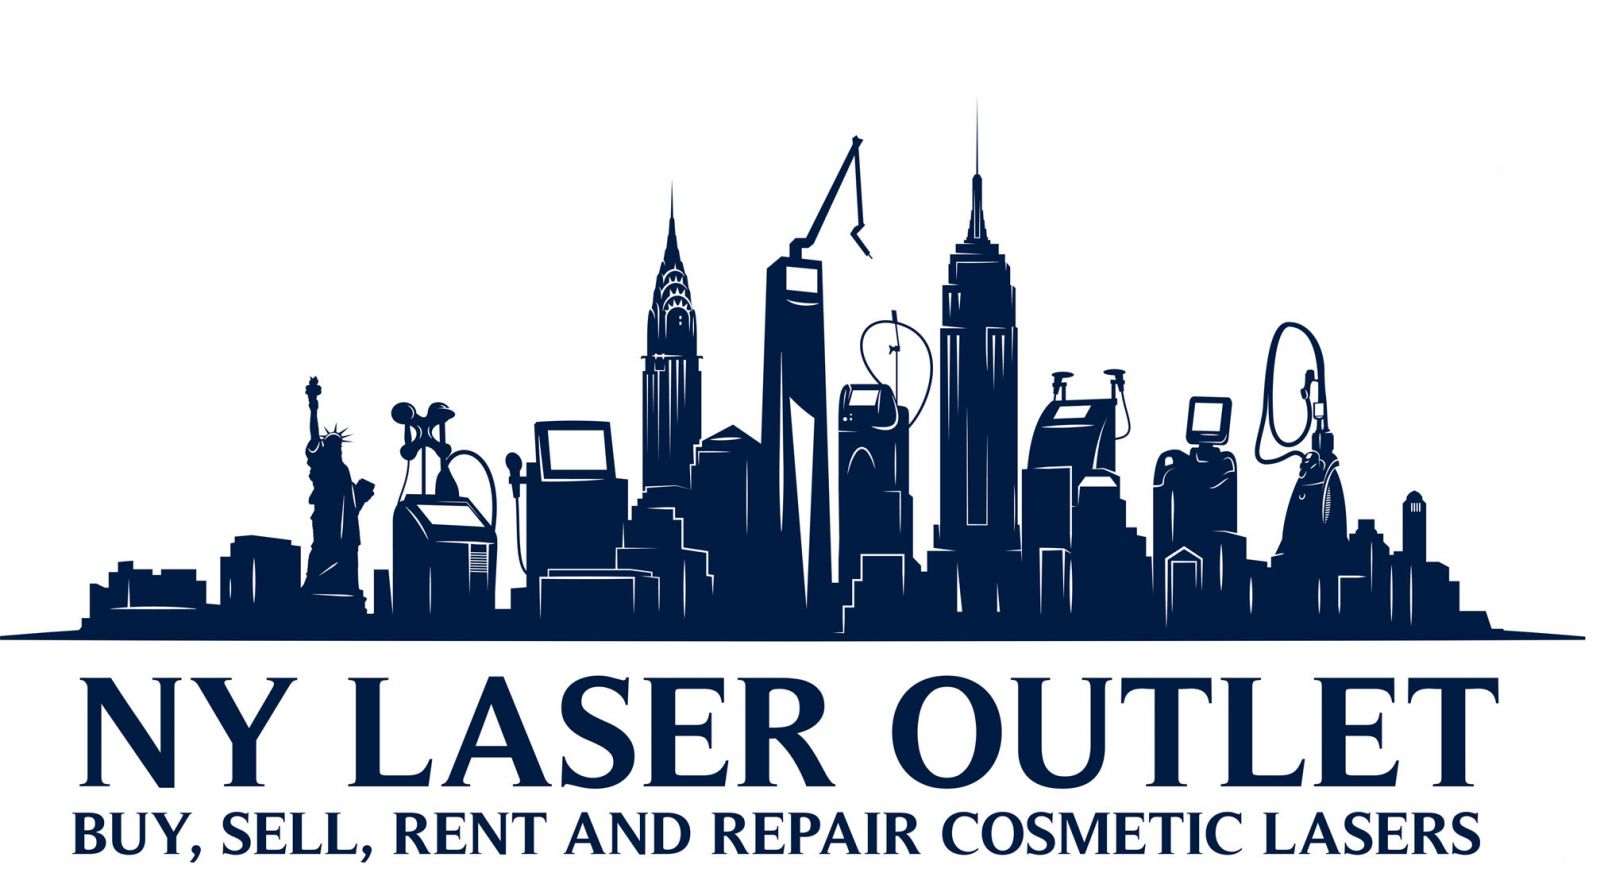 NY Laser Outlet